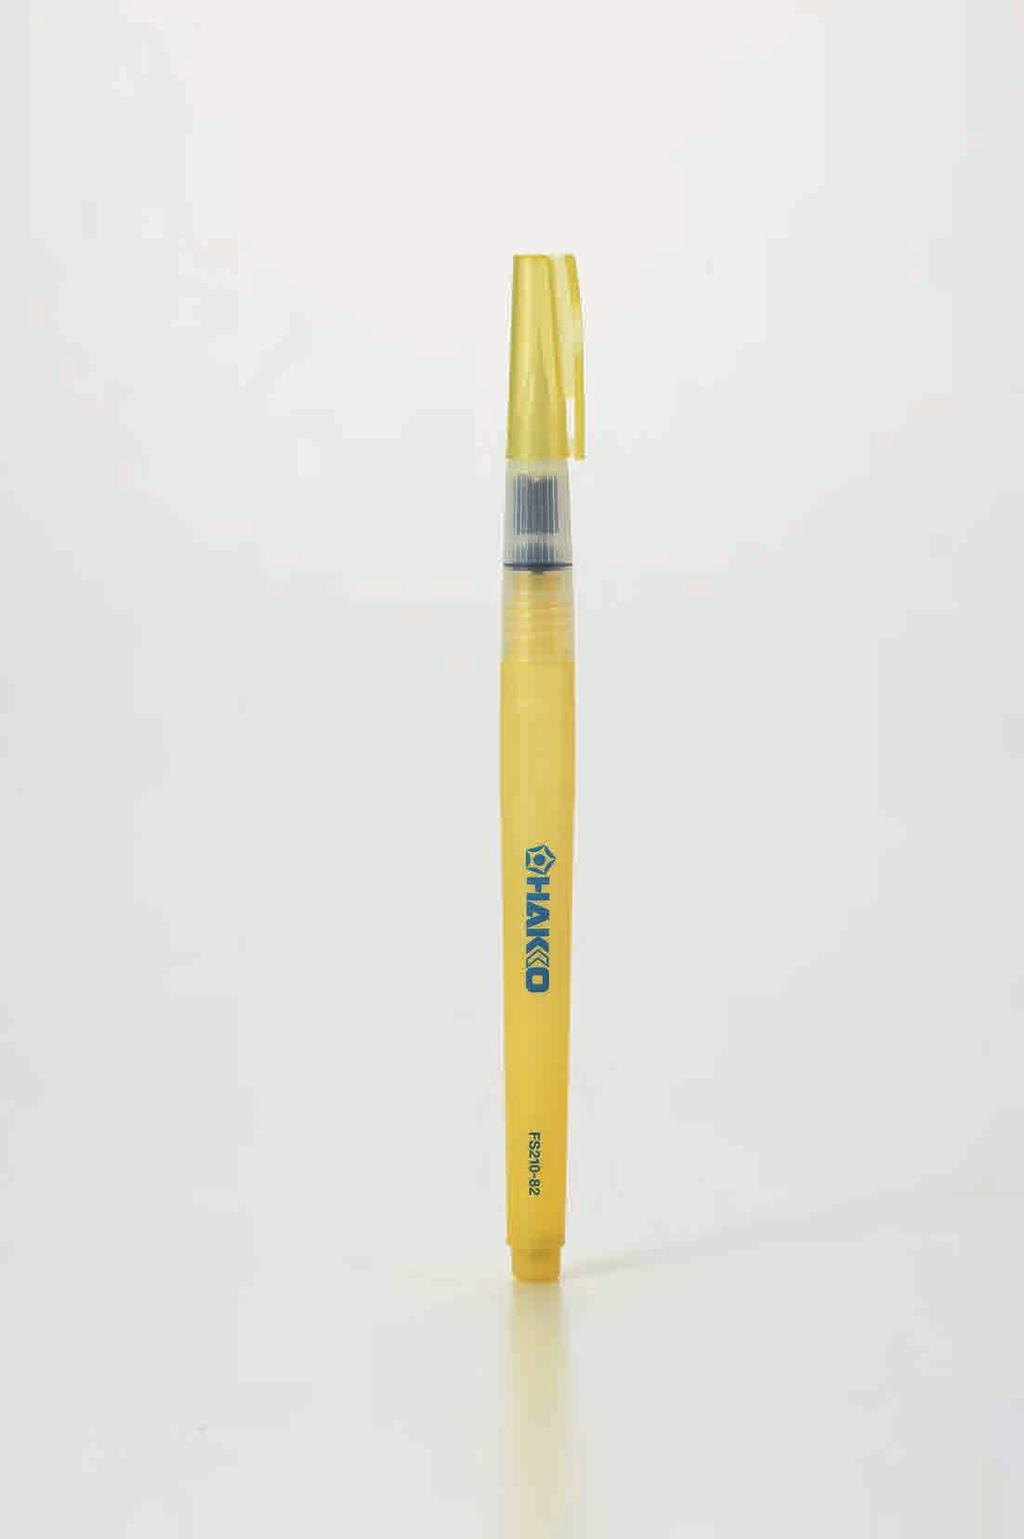 Pen Brush-tip Type Pen Features Pen f pinpoint application of optimum amount